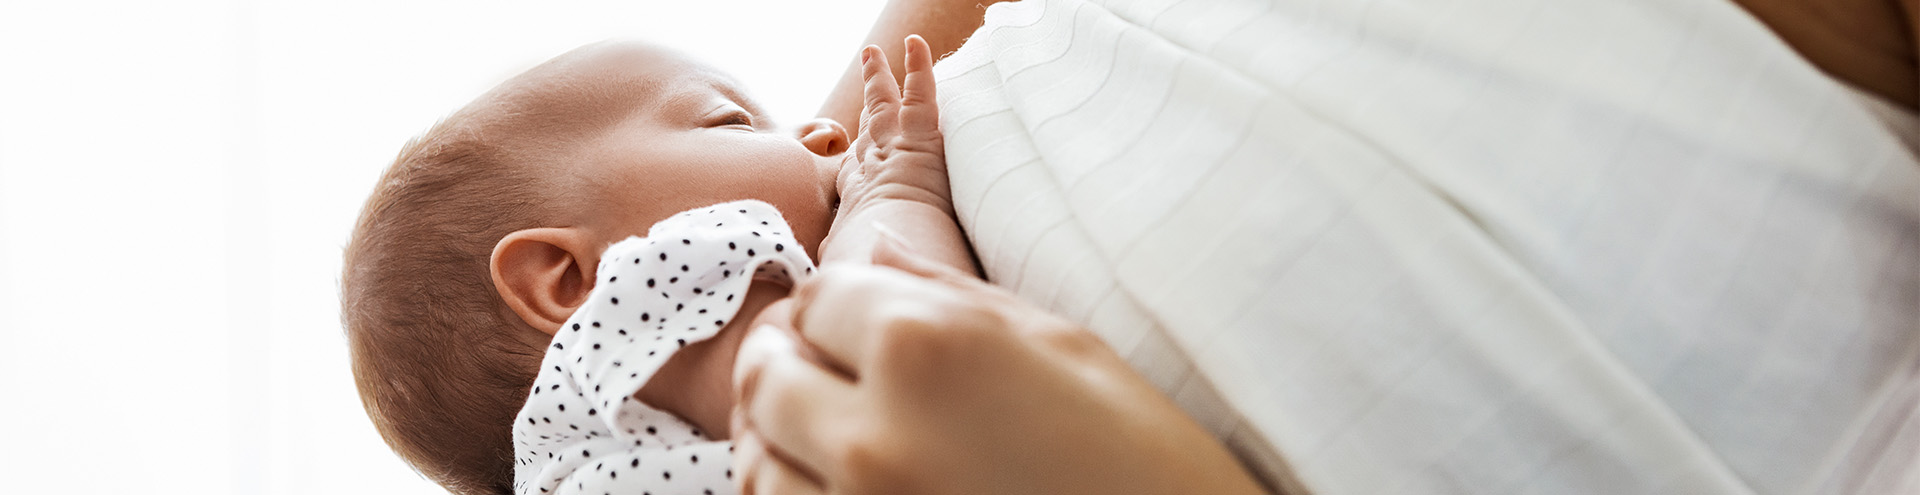 How to Stop Breastfeeding - Breastfeeding Advice - Huggies